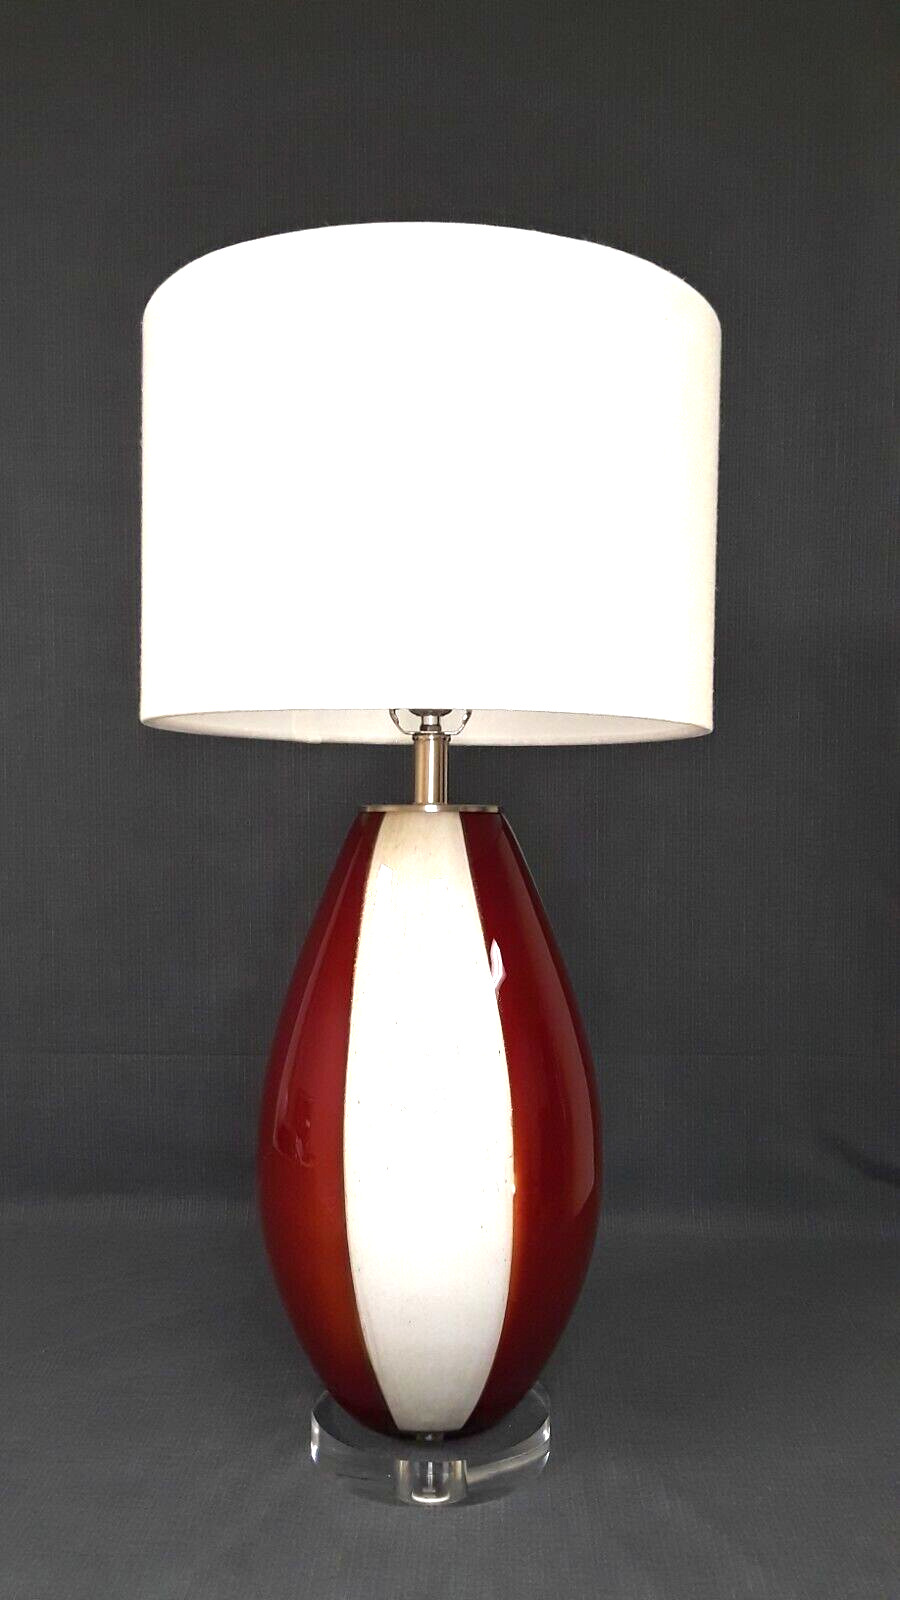 Retro Italian Blown Art Glass Teo Table Lamp Red & White Gold Aventurine MCM